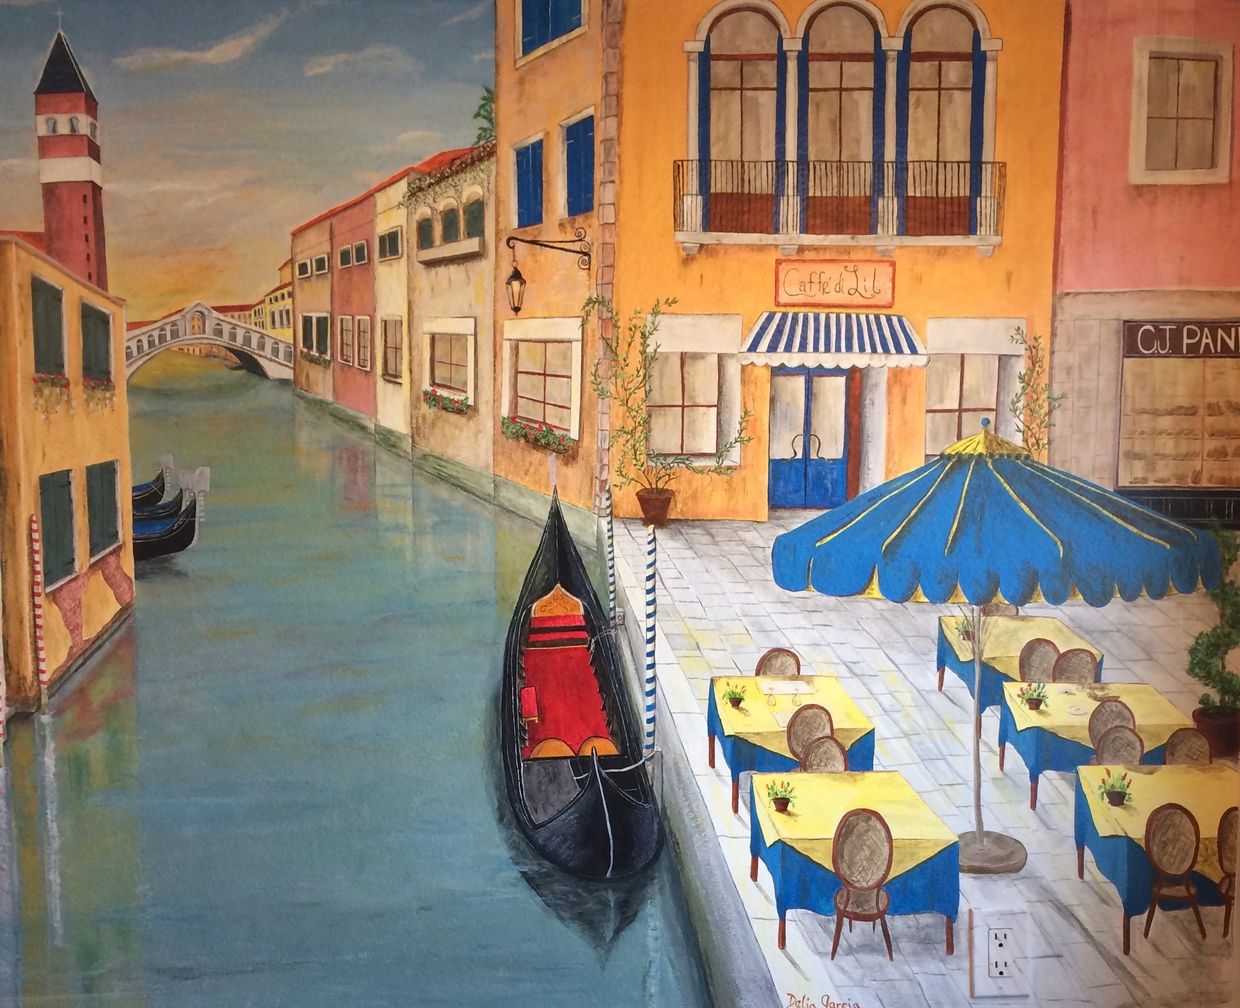 Mural by Dalia Garcia, canal in Venice, Italy, Café, tables & chairs, umbrella, gondolas, buildings